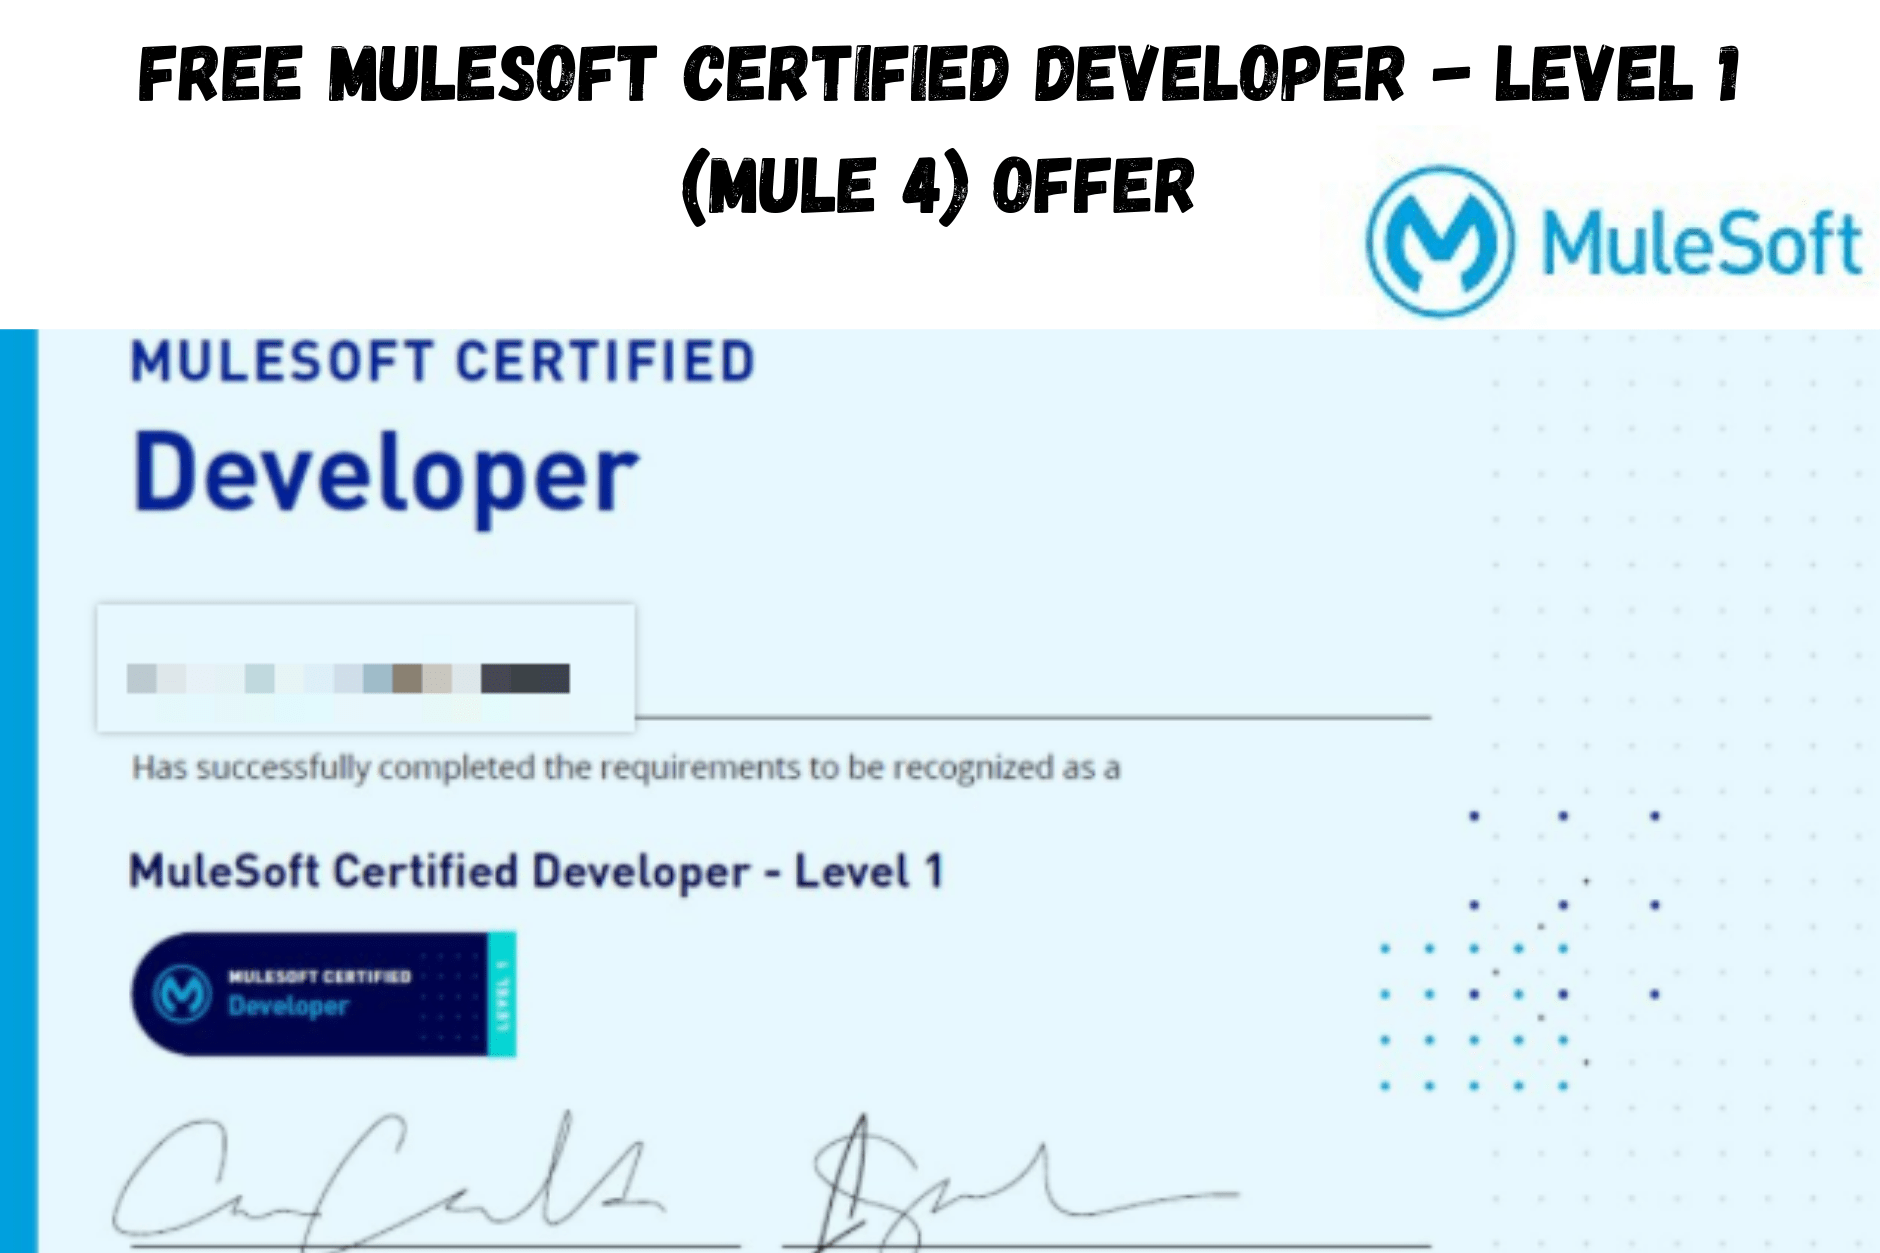 Free MuleSoft Certified Developer - Level 1 (Mule 4) Offer